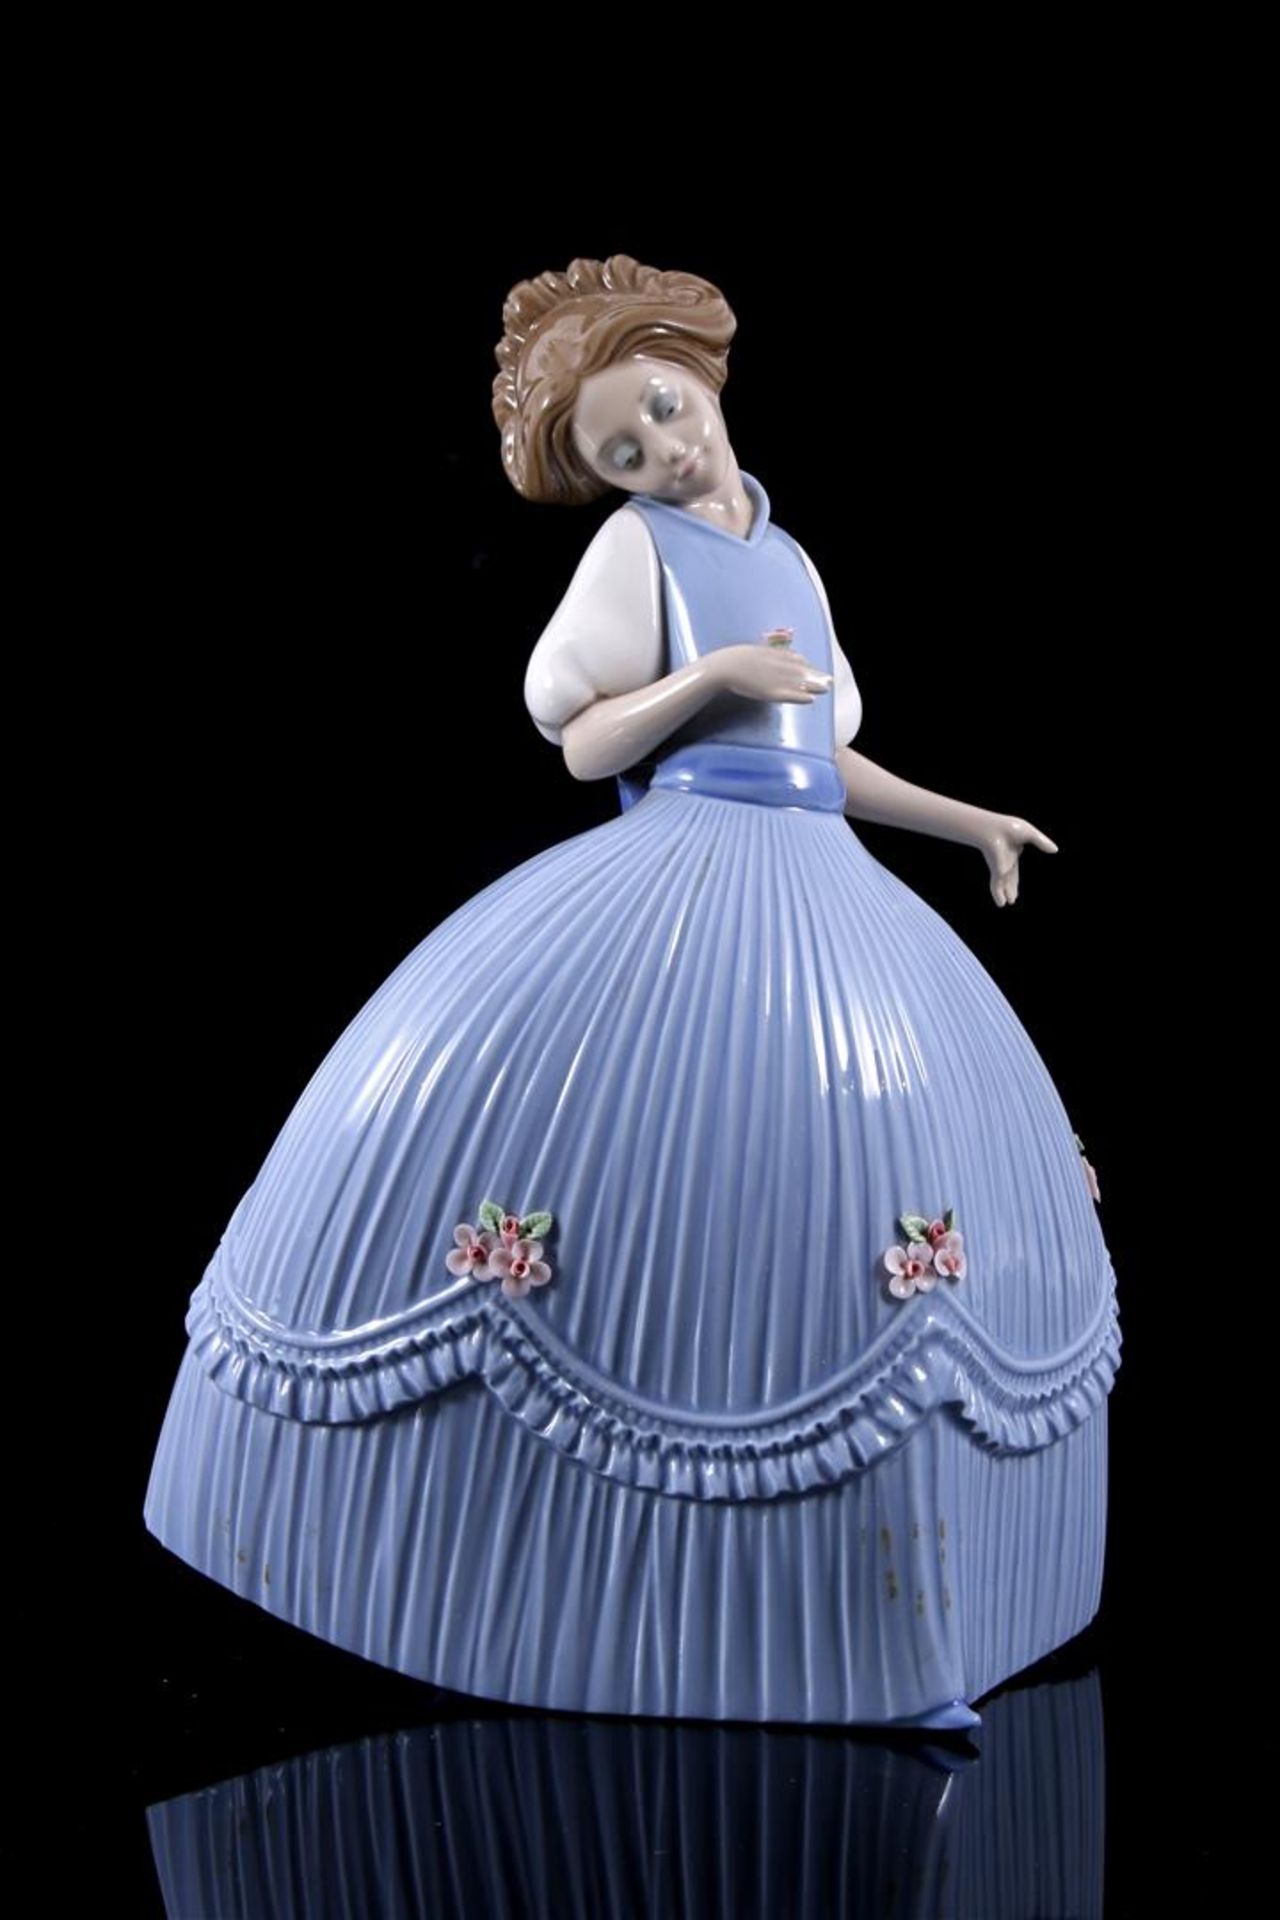 Lladro porseleinen beeld nr. 5119, Girl in Bluish Dress, Primavero No. 2, ontwerp Jose Puche,